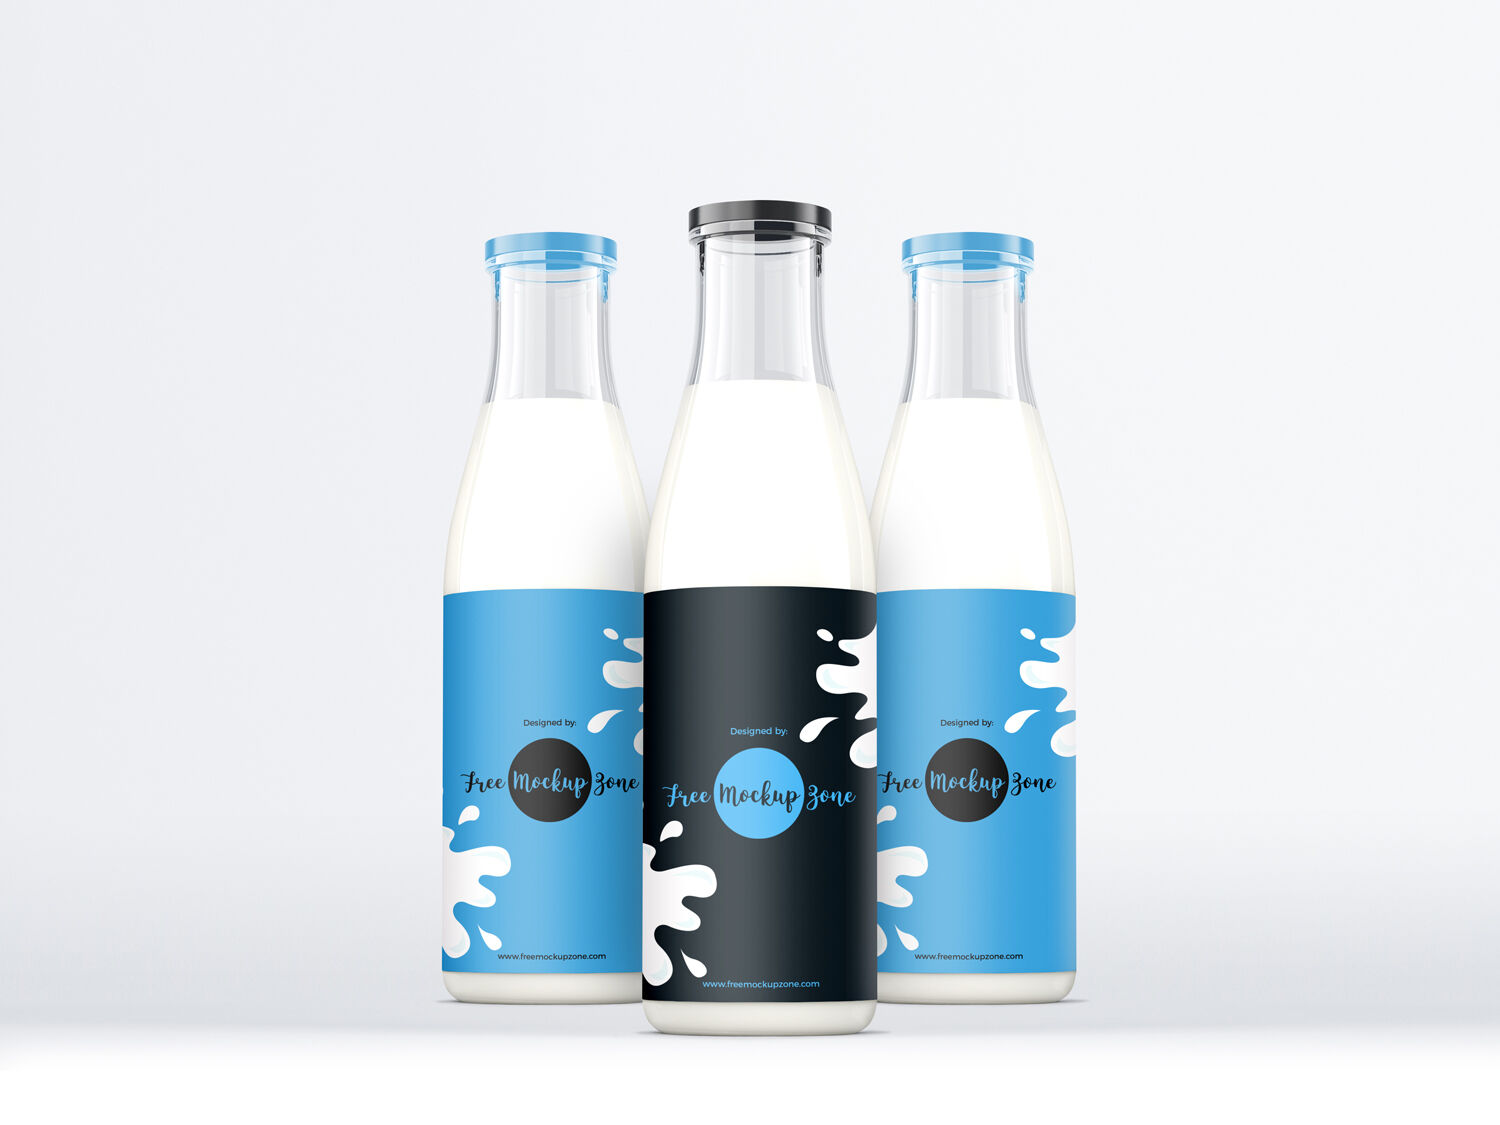 https://resourceboy.com/wp-content/uploads/2021/12/set-of-three-glass-milk-bottles-mockup.jpg